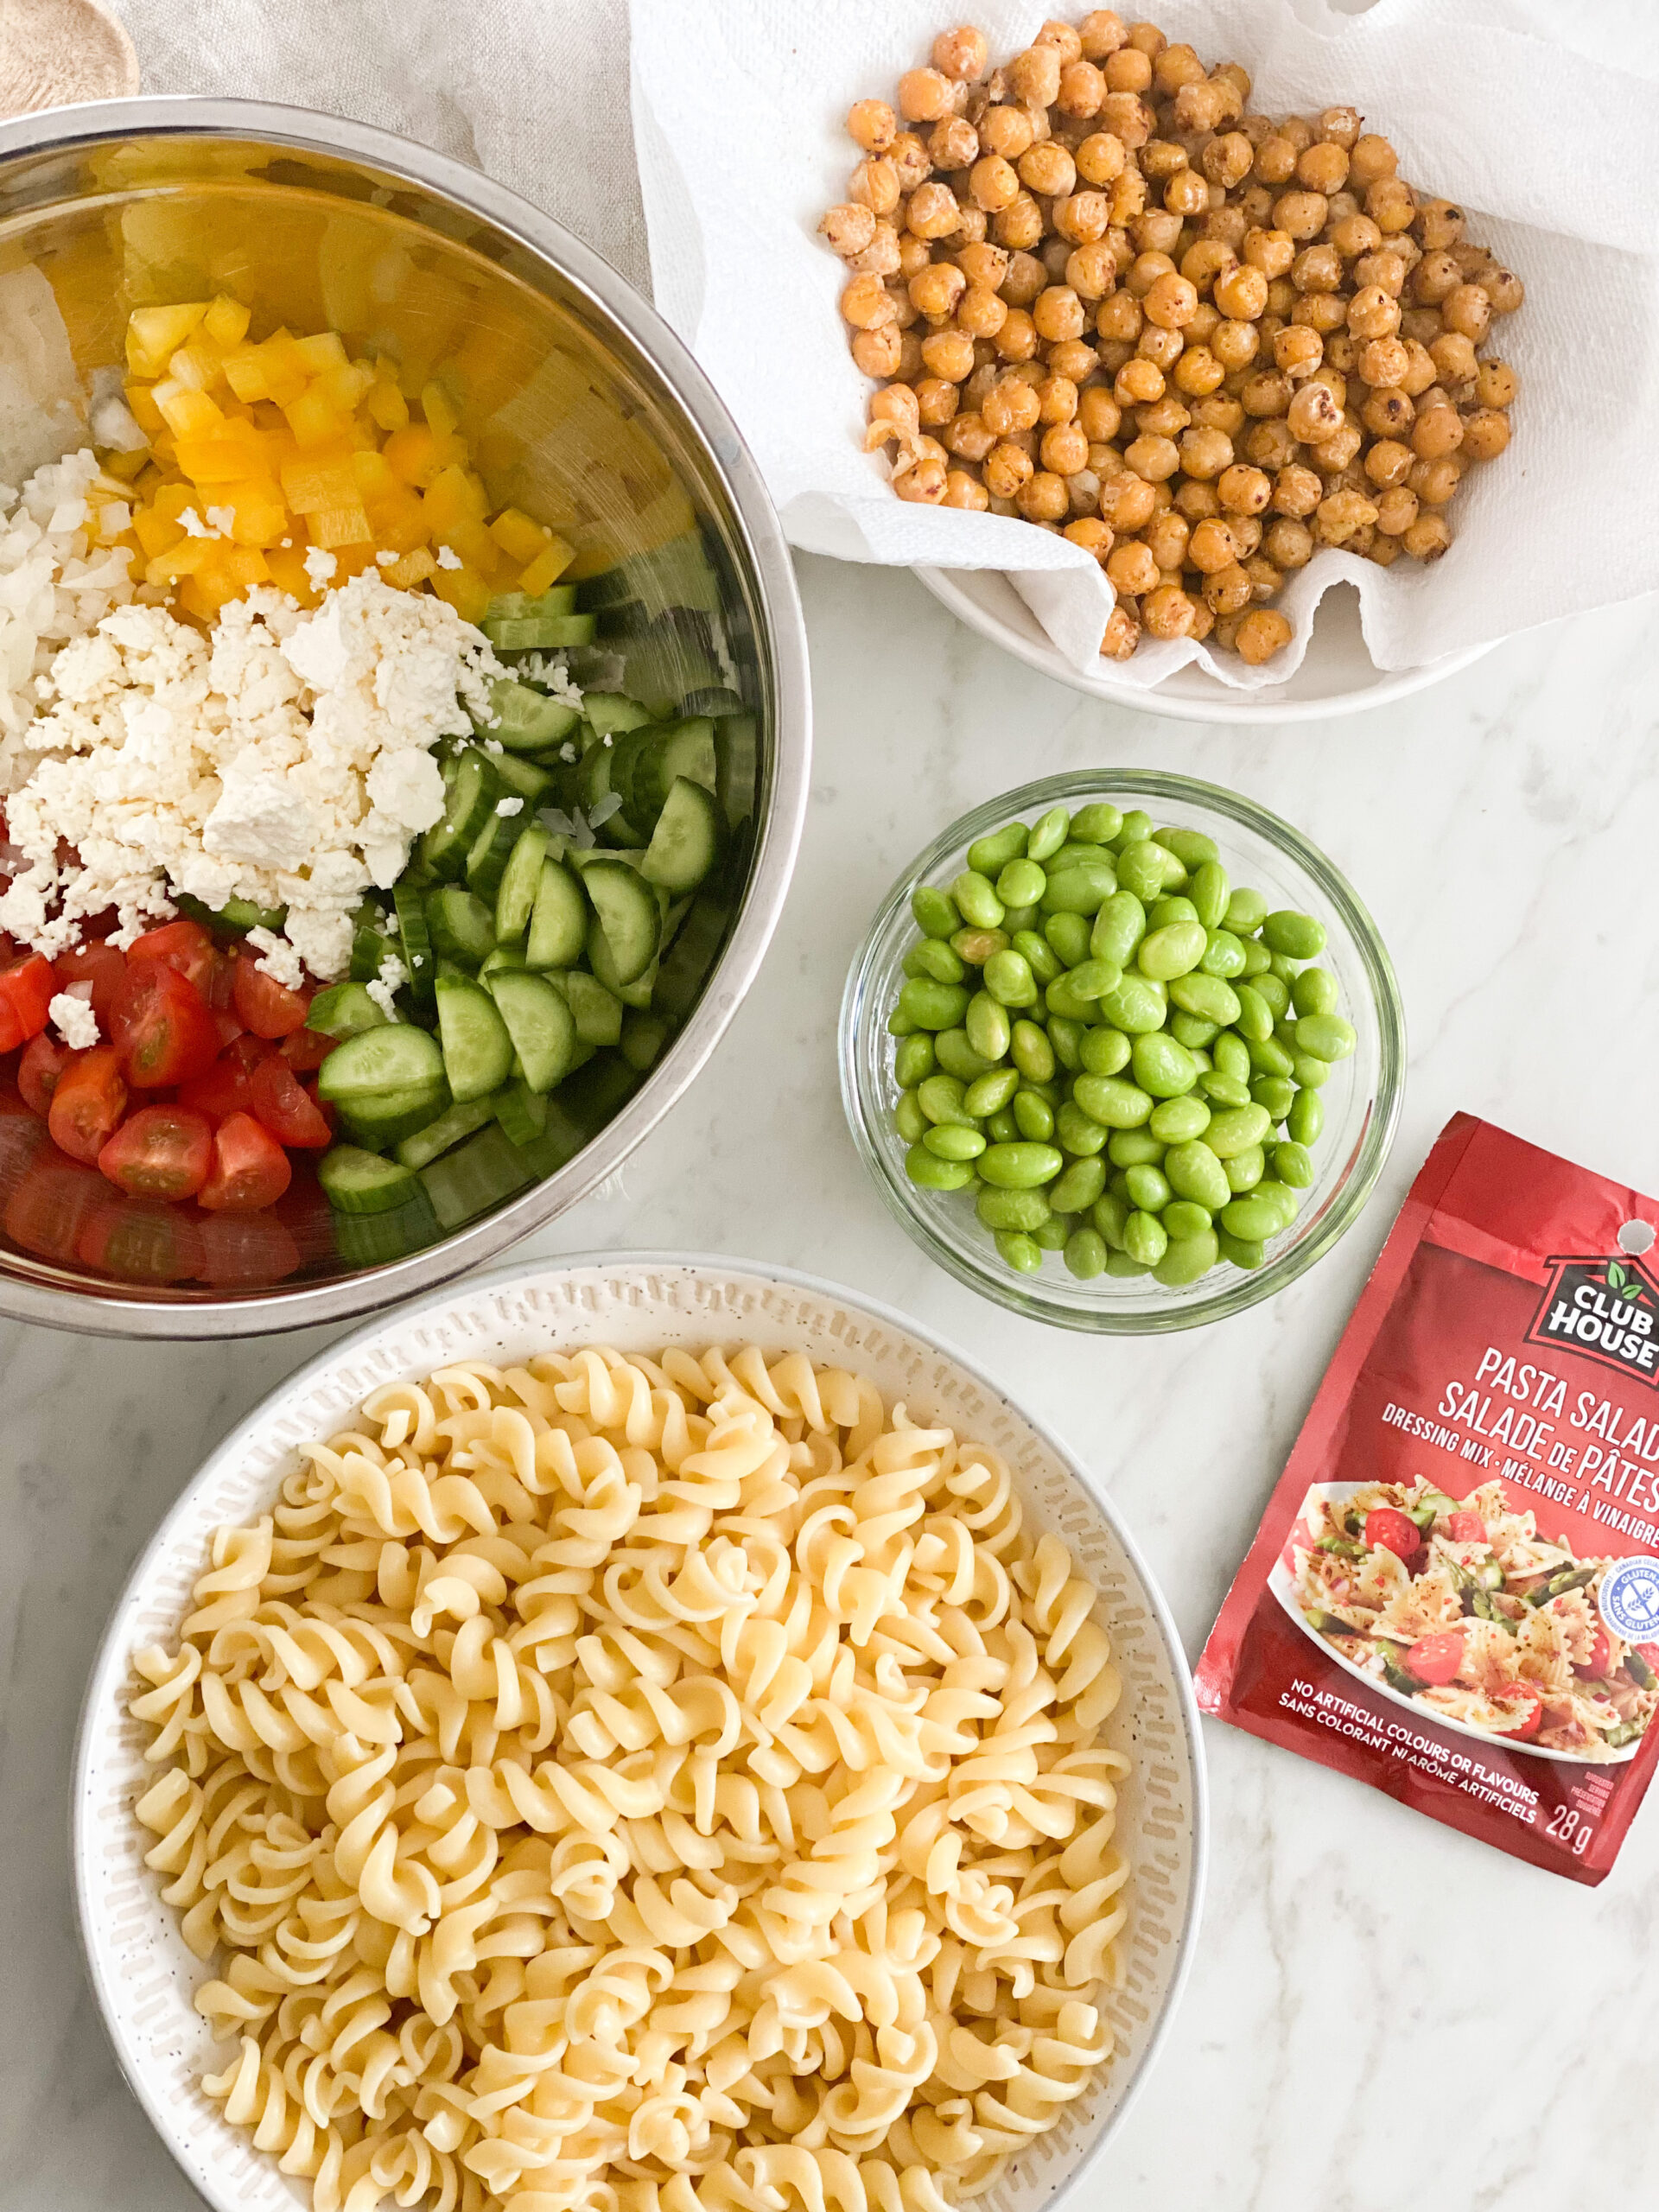 lunchbox pasta salad ingredients